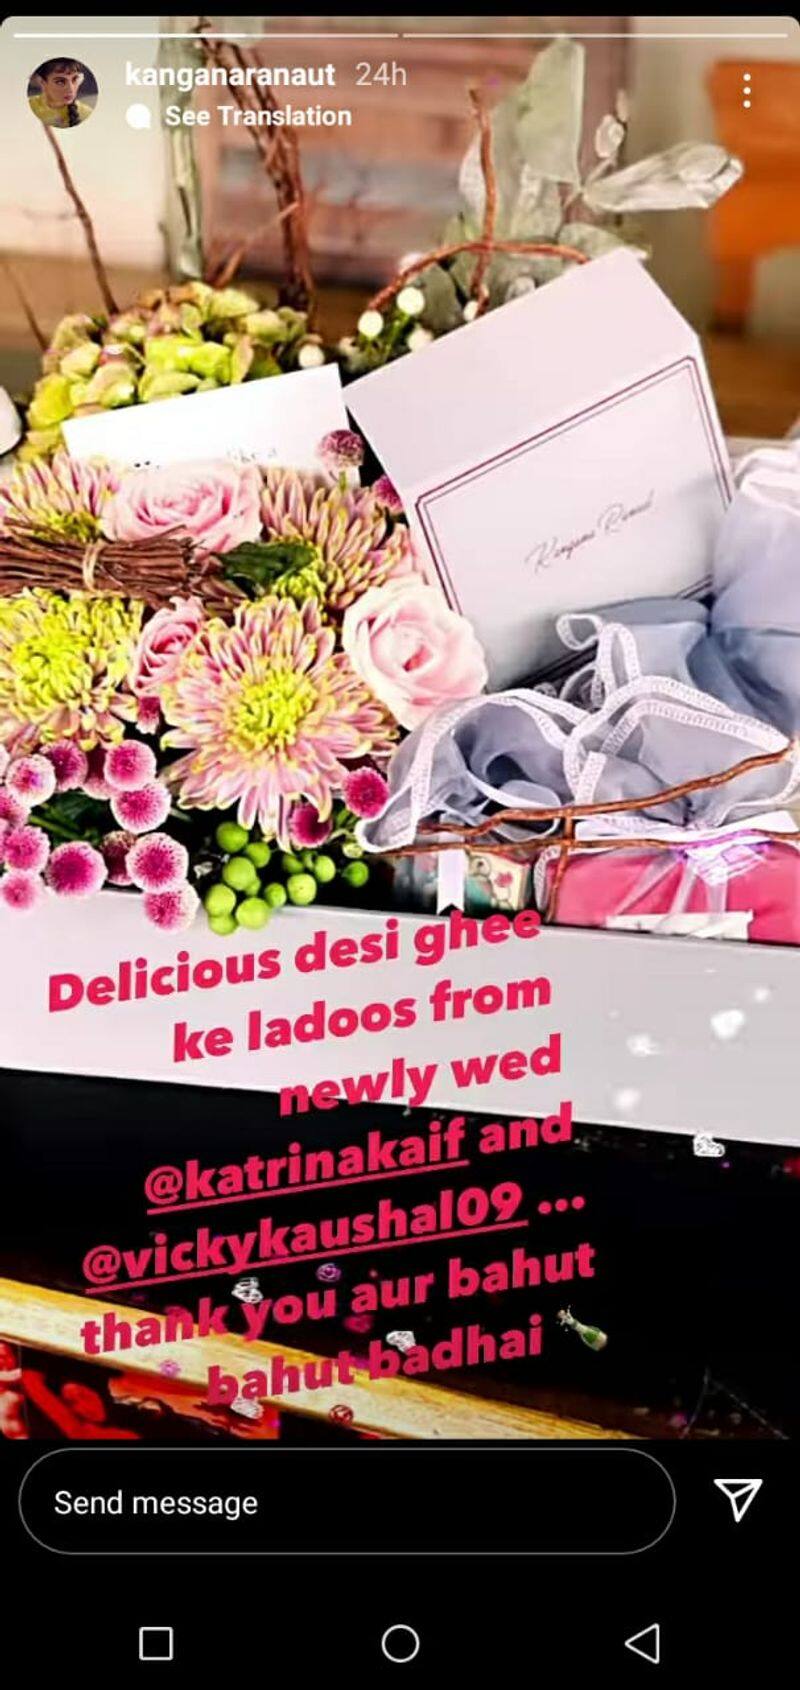 Kangana Ranaut thanks Katrina Kaif and Vicky Kaushal for sending her ghee laddoos dpl